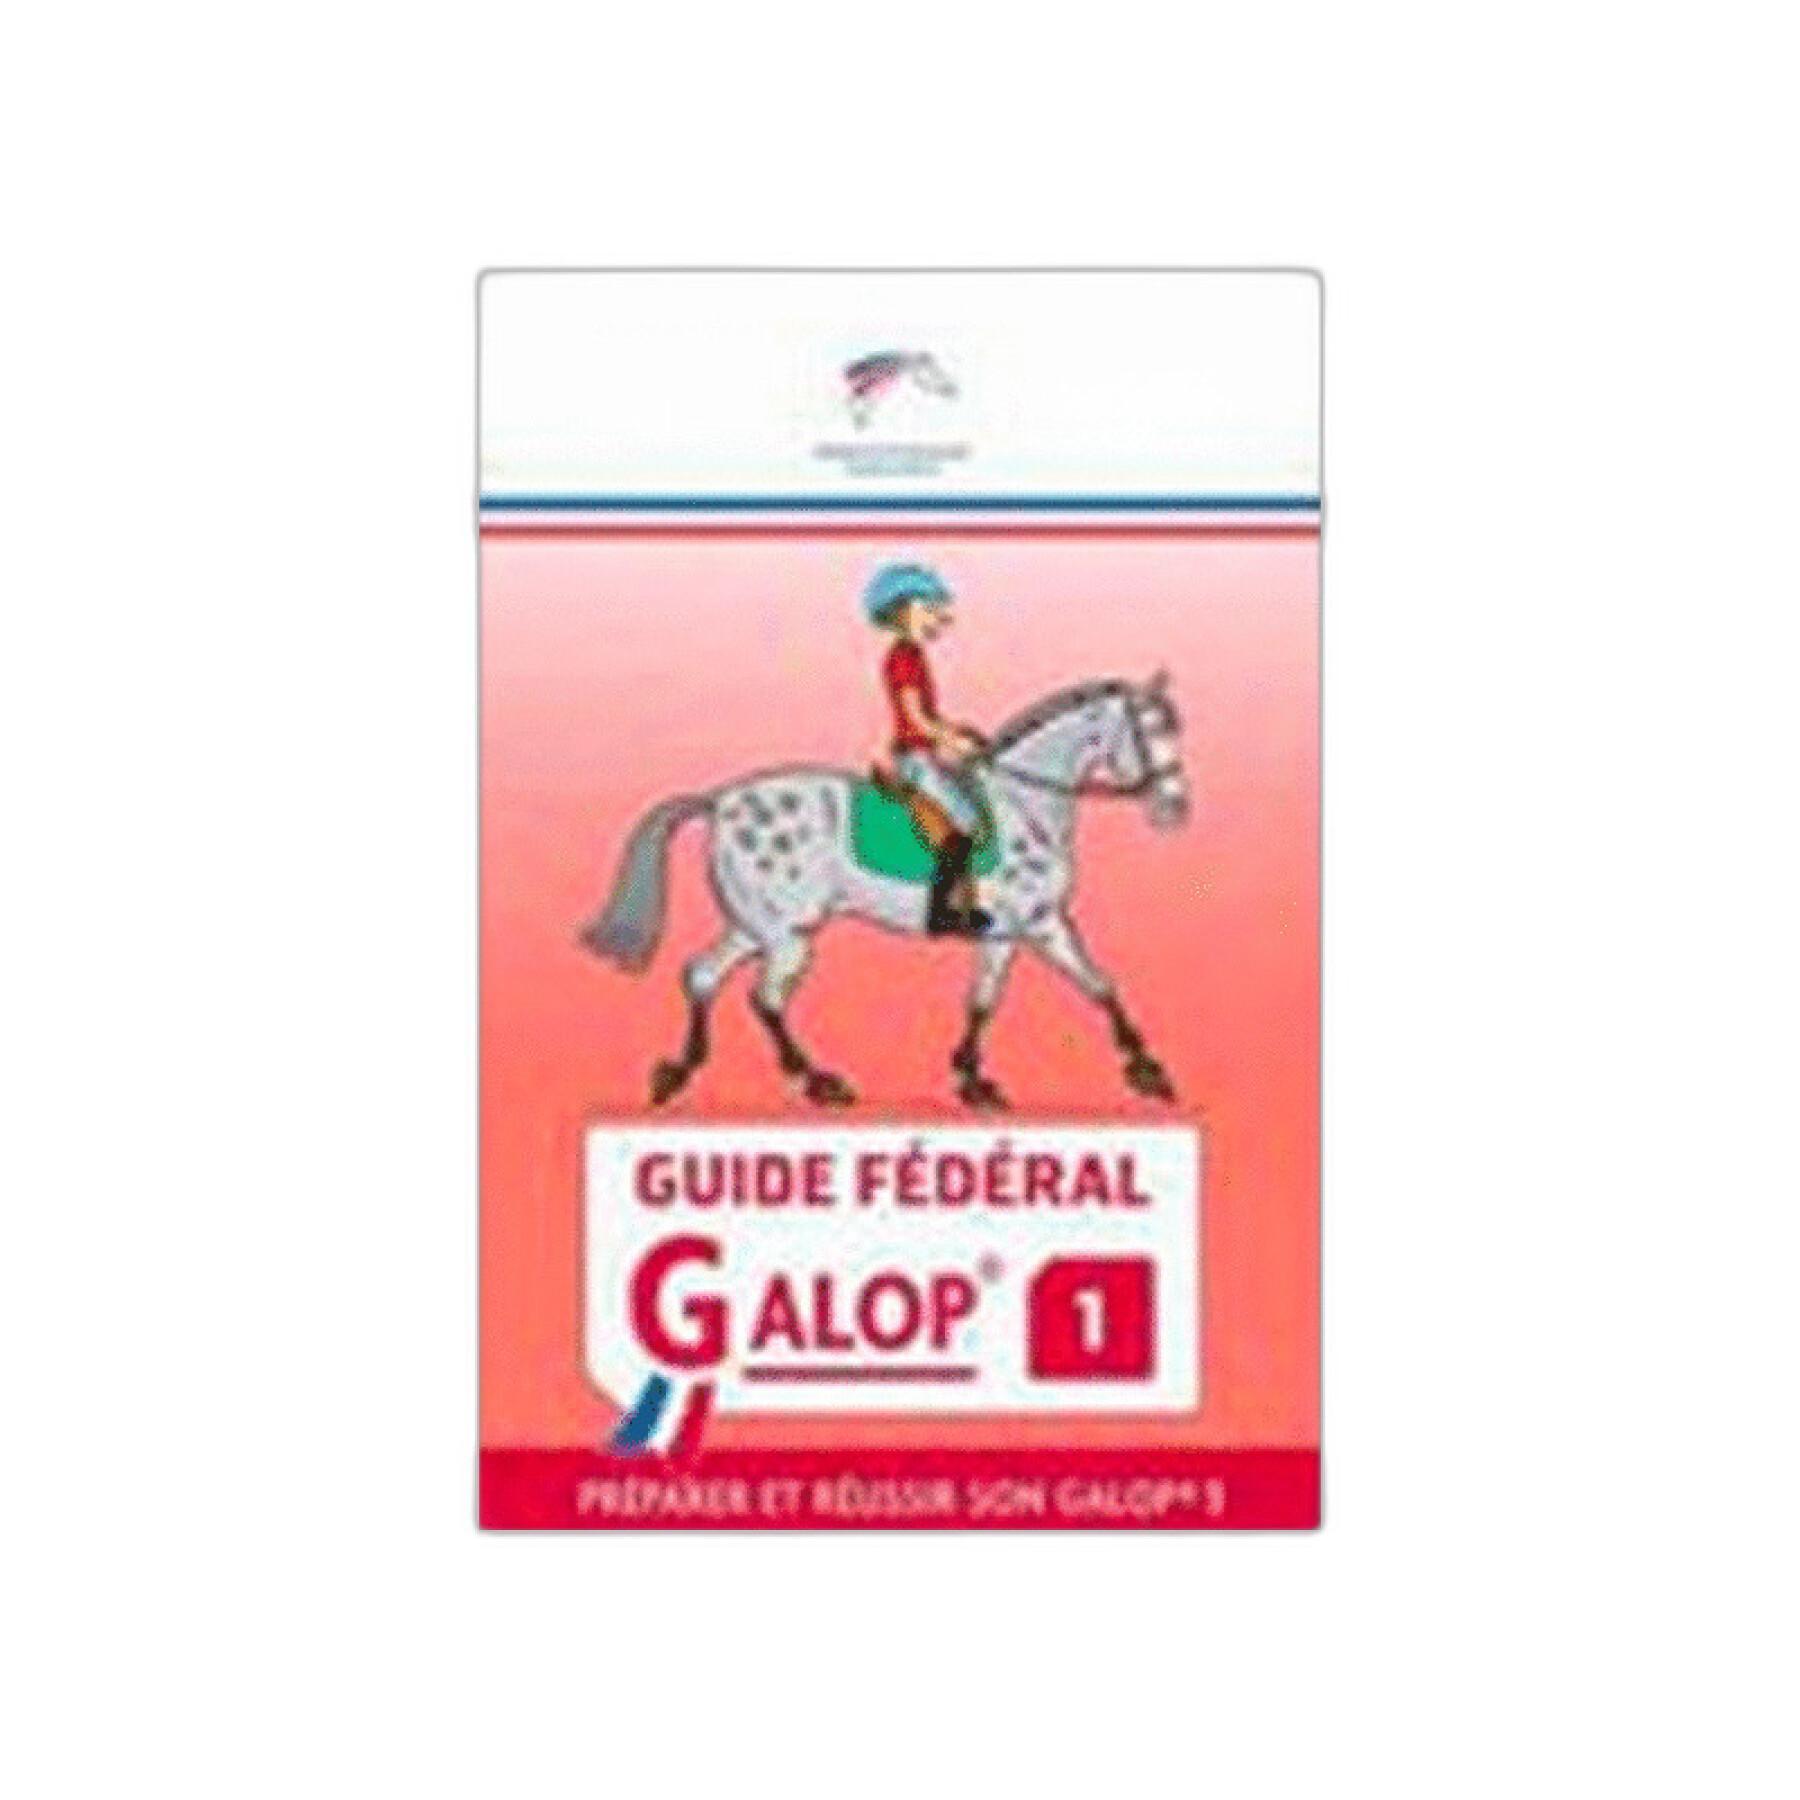 Federal Guide Book Ekkia FFE Galop® 1